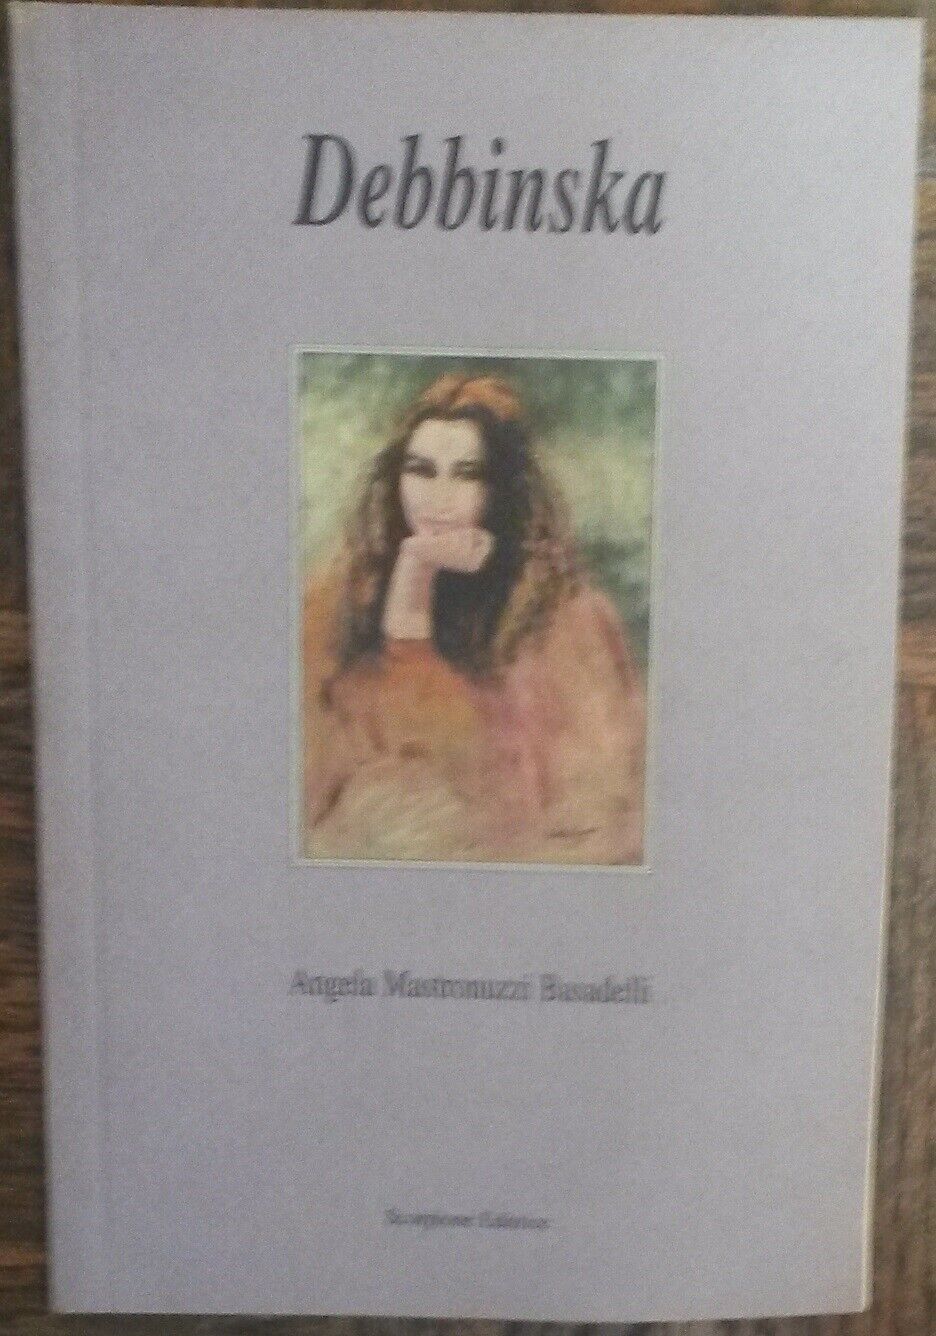 Debbinska - Angela Mastronuzzi Basadelli - Scorpione Editrice,2000 - R